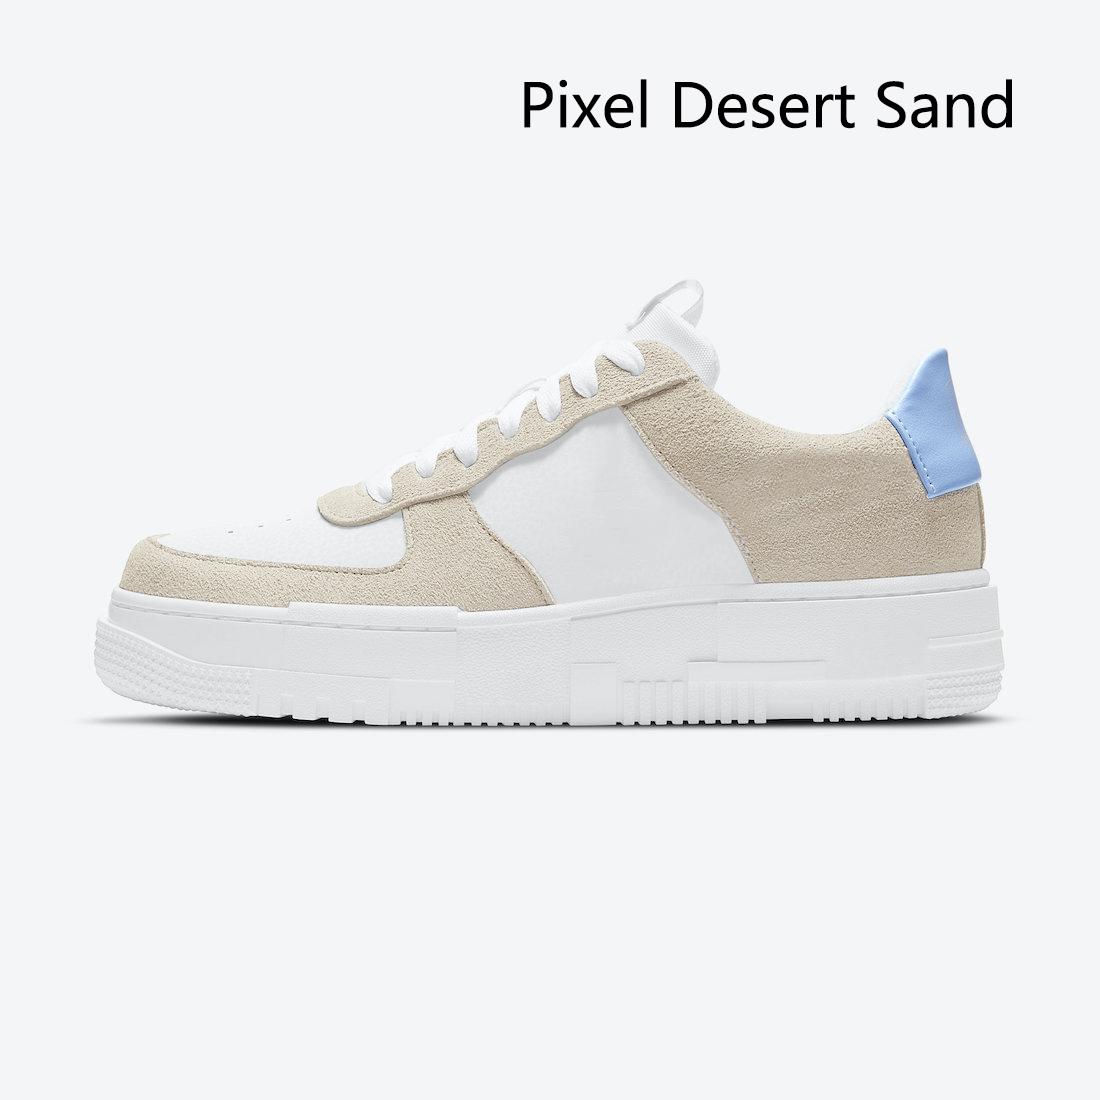 Pixel Gold Chain Low Running Chaussures Desert Sand Fres